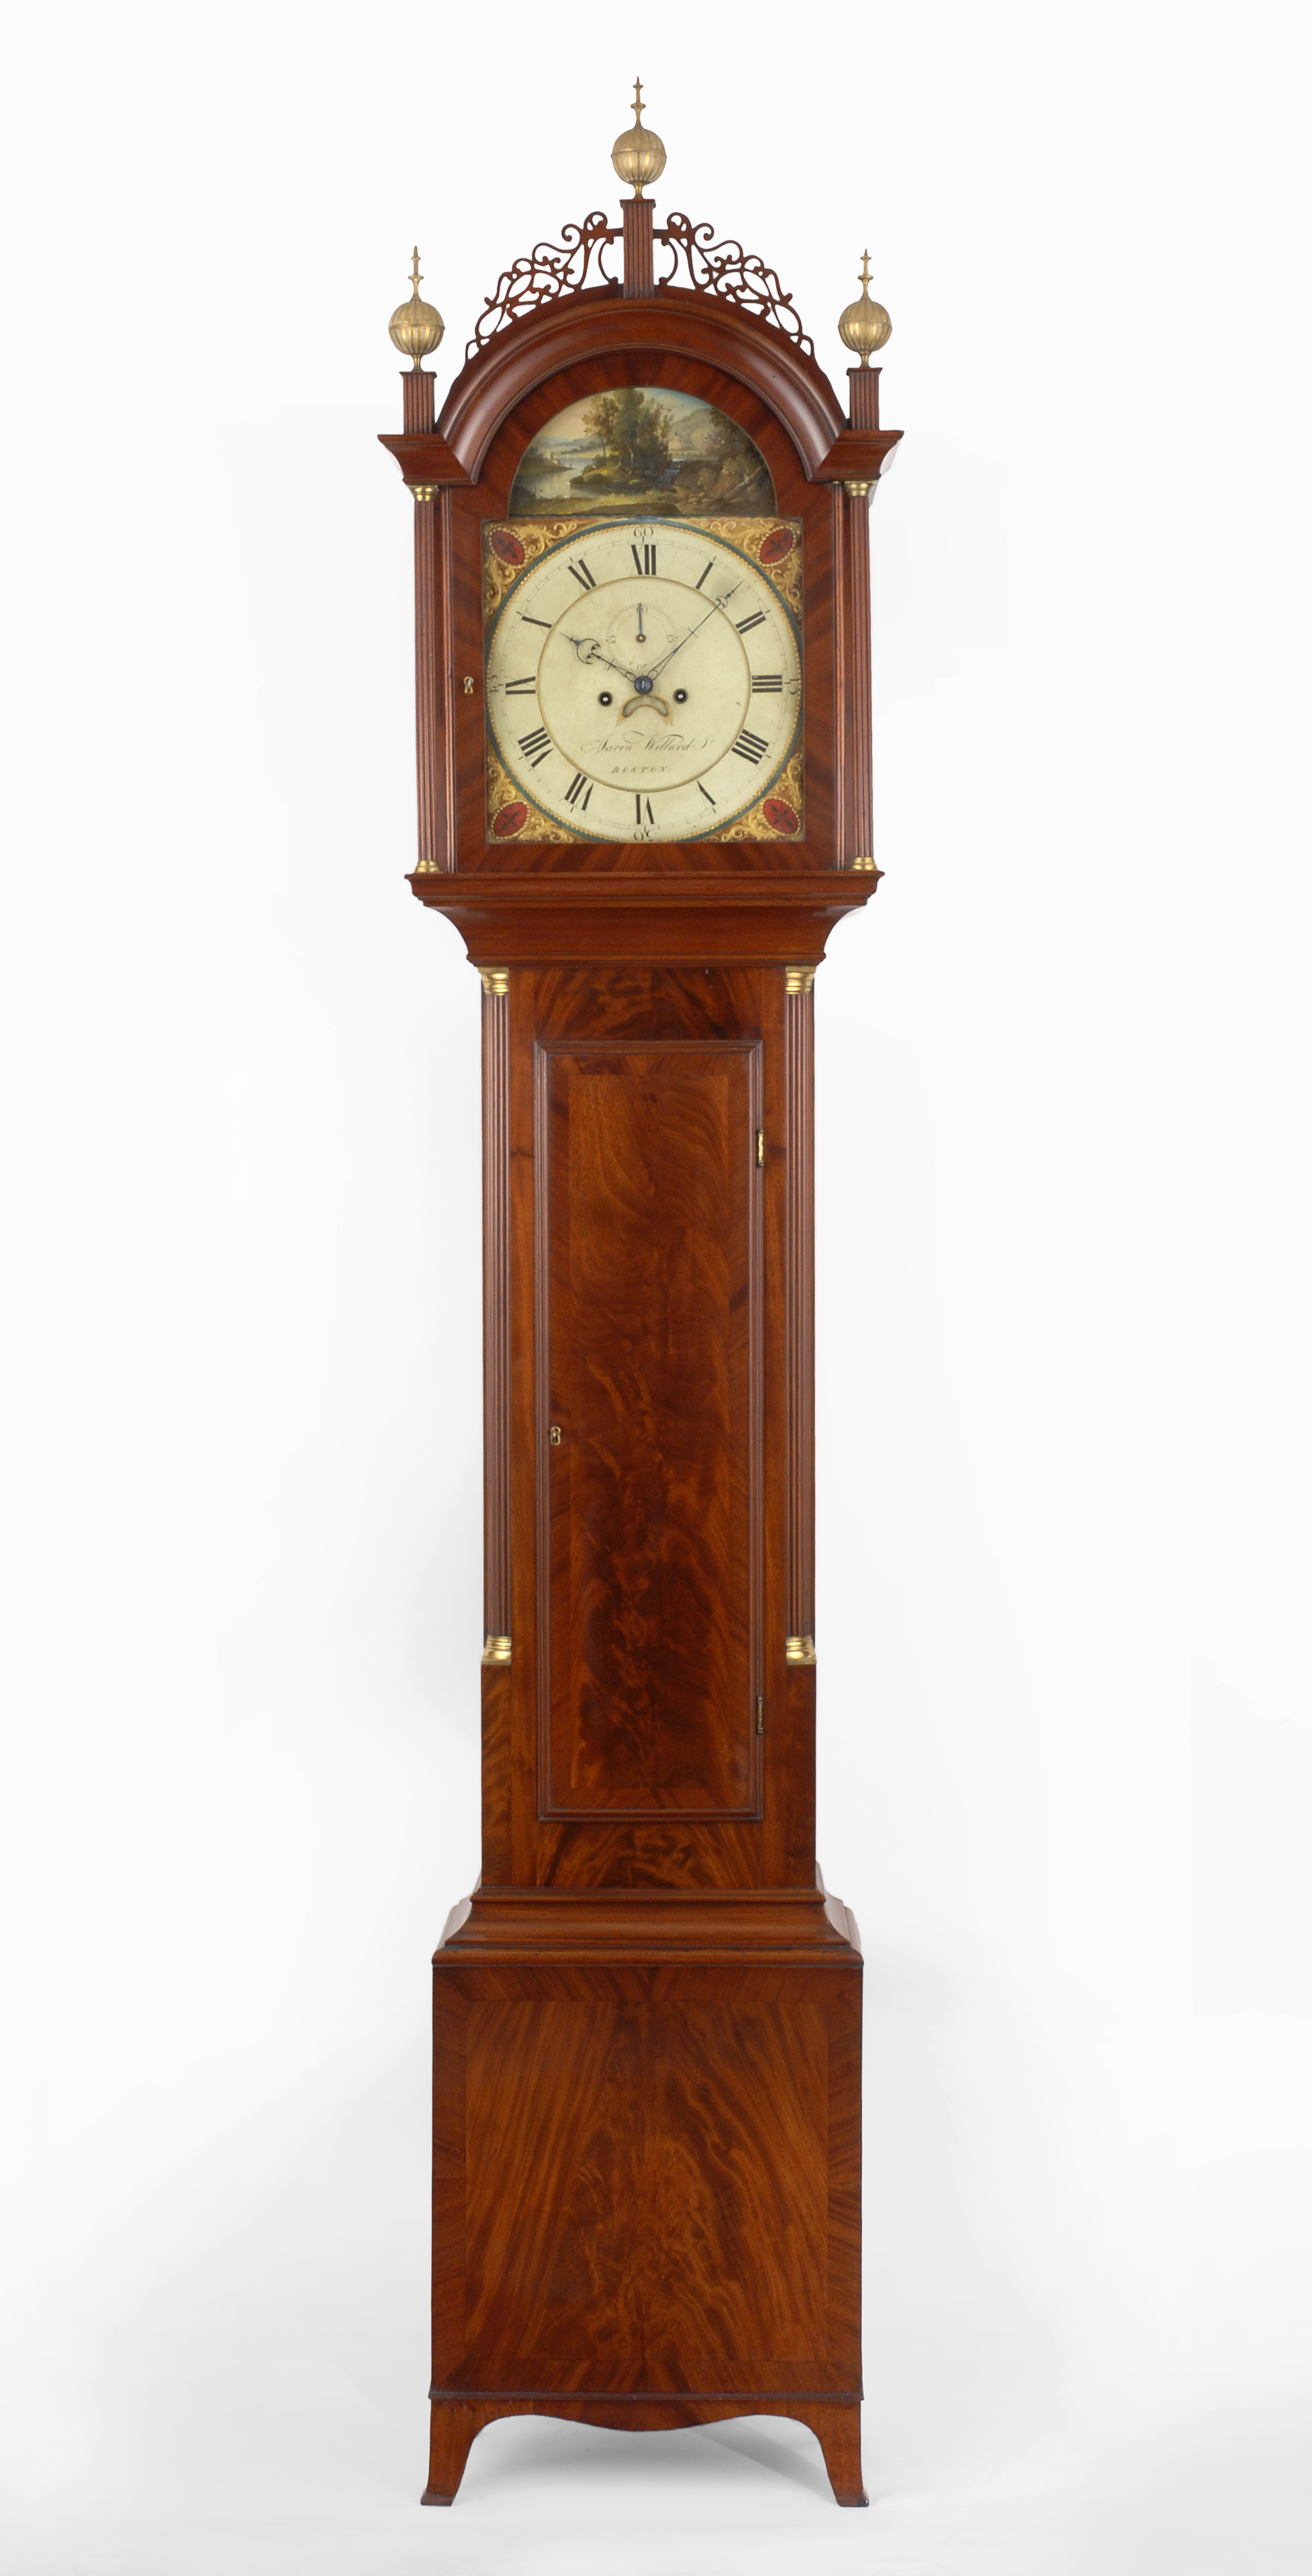 An Impressive Hepplewhite Tall Case Clock, By Aaron Willard Jr. The Case Attributed to Thomas Seymour, Boston, Circa 1815-20.